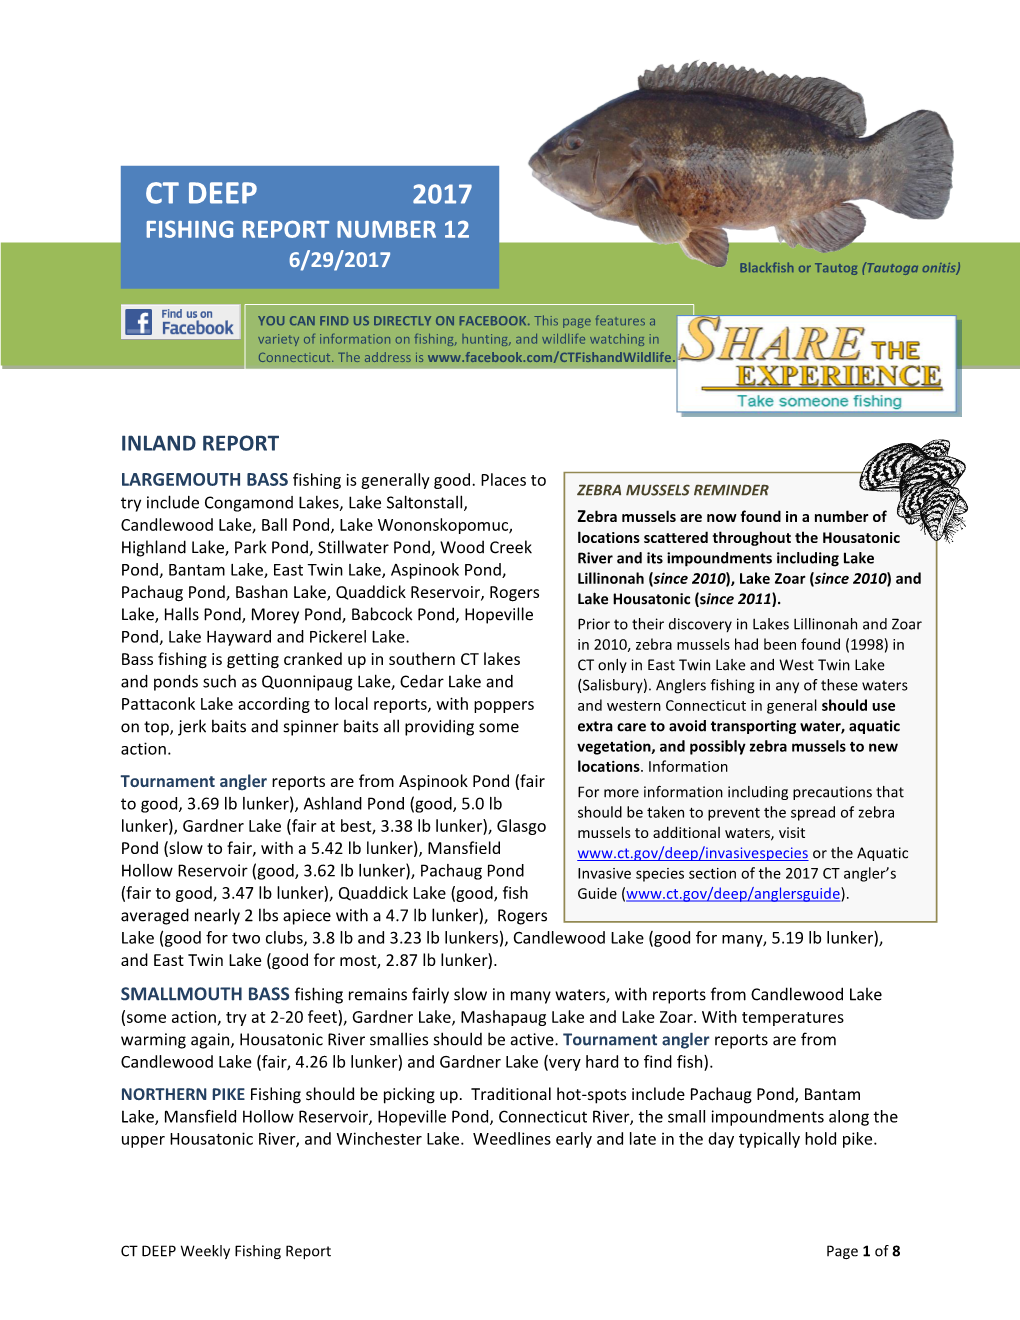 CT DEEP 2017 FISHING REPORT NUMBER 12 Channel Catfish (Ictalurus Punctatus) 6/29/2017 Blackfish Or Tautog (Tautoga Onitis)